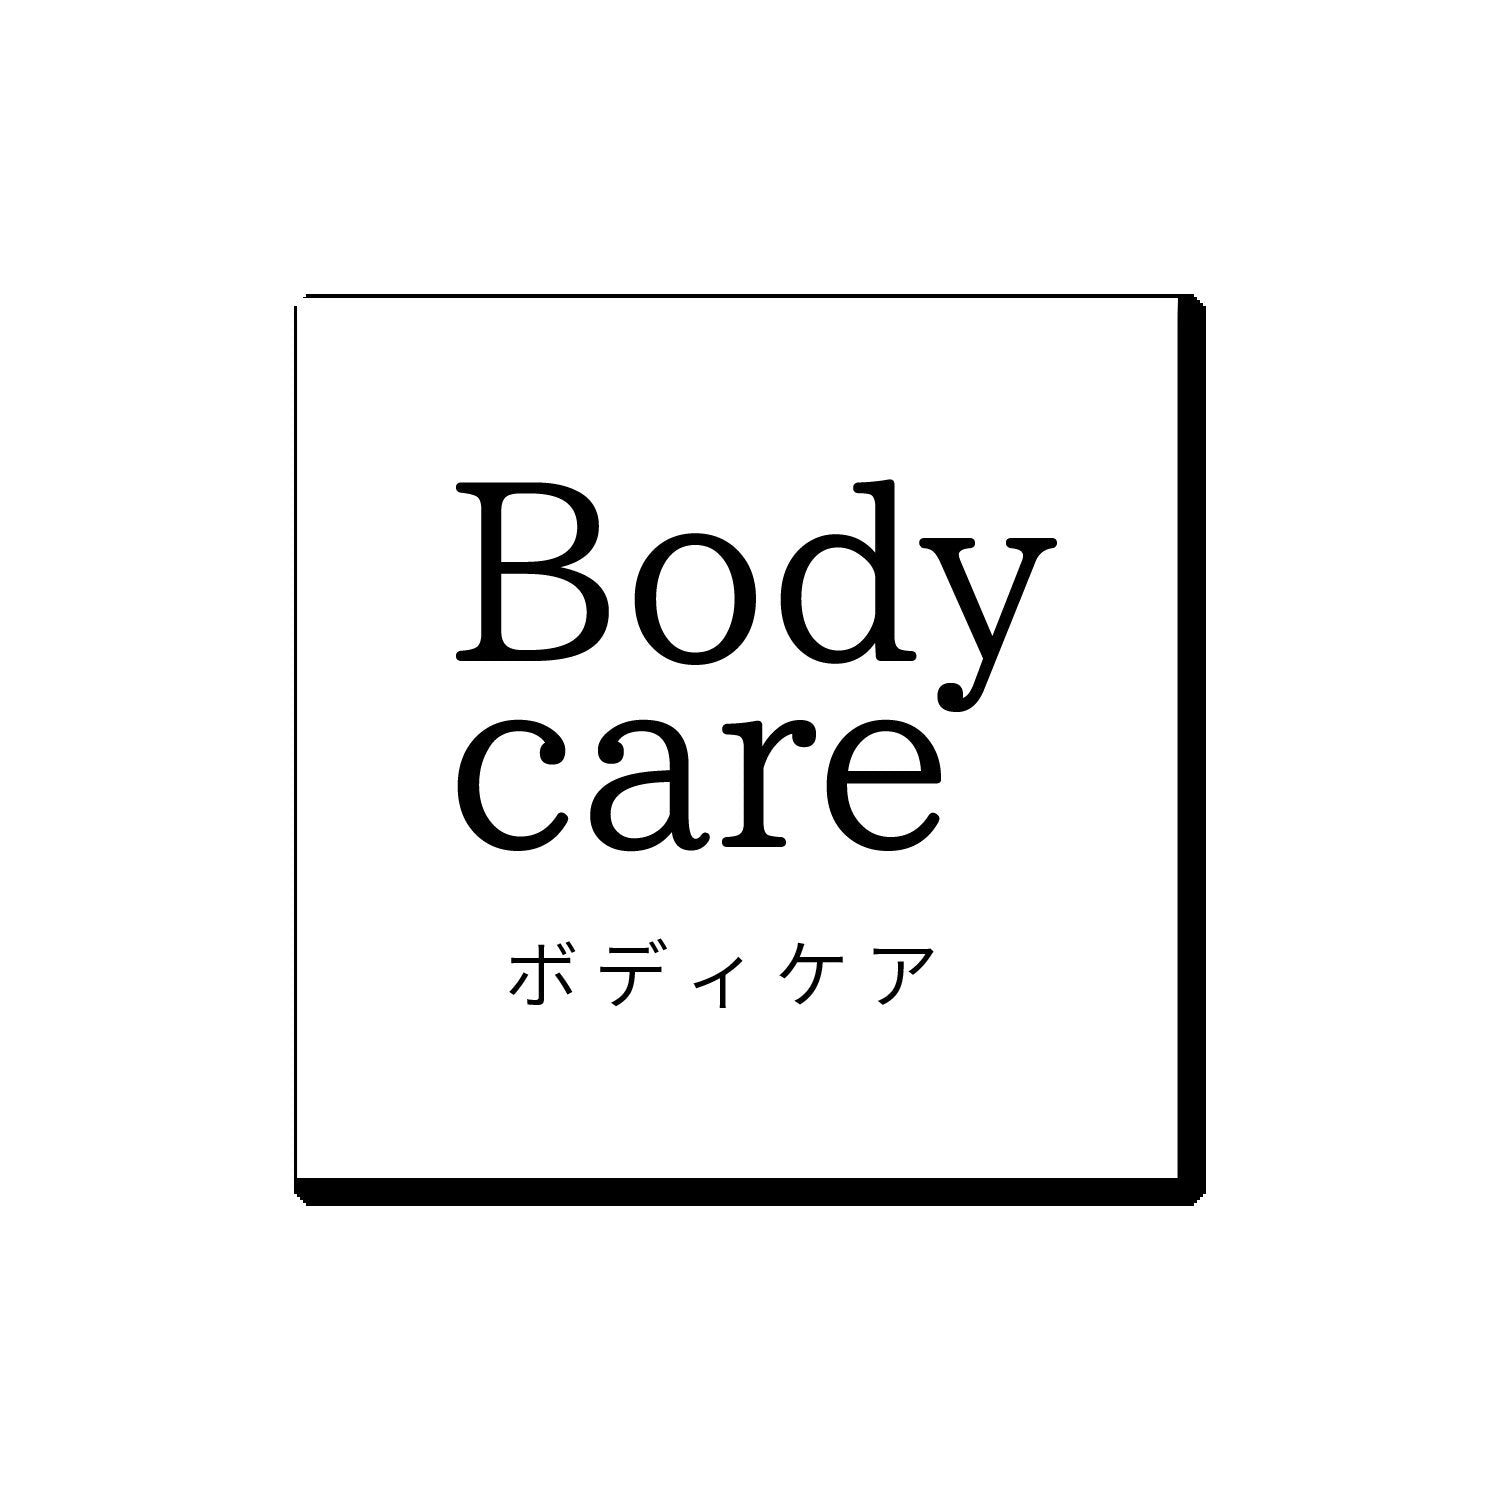 CBD Body care